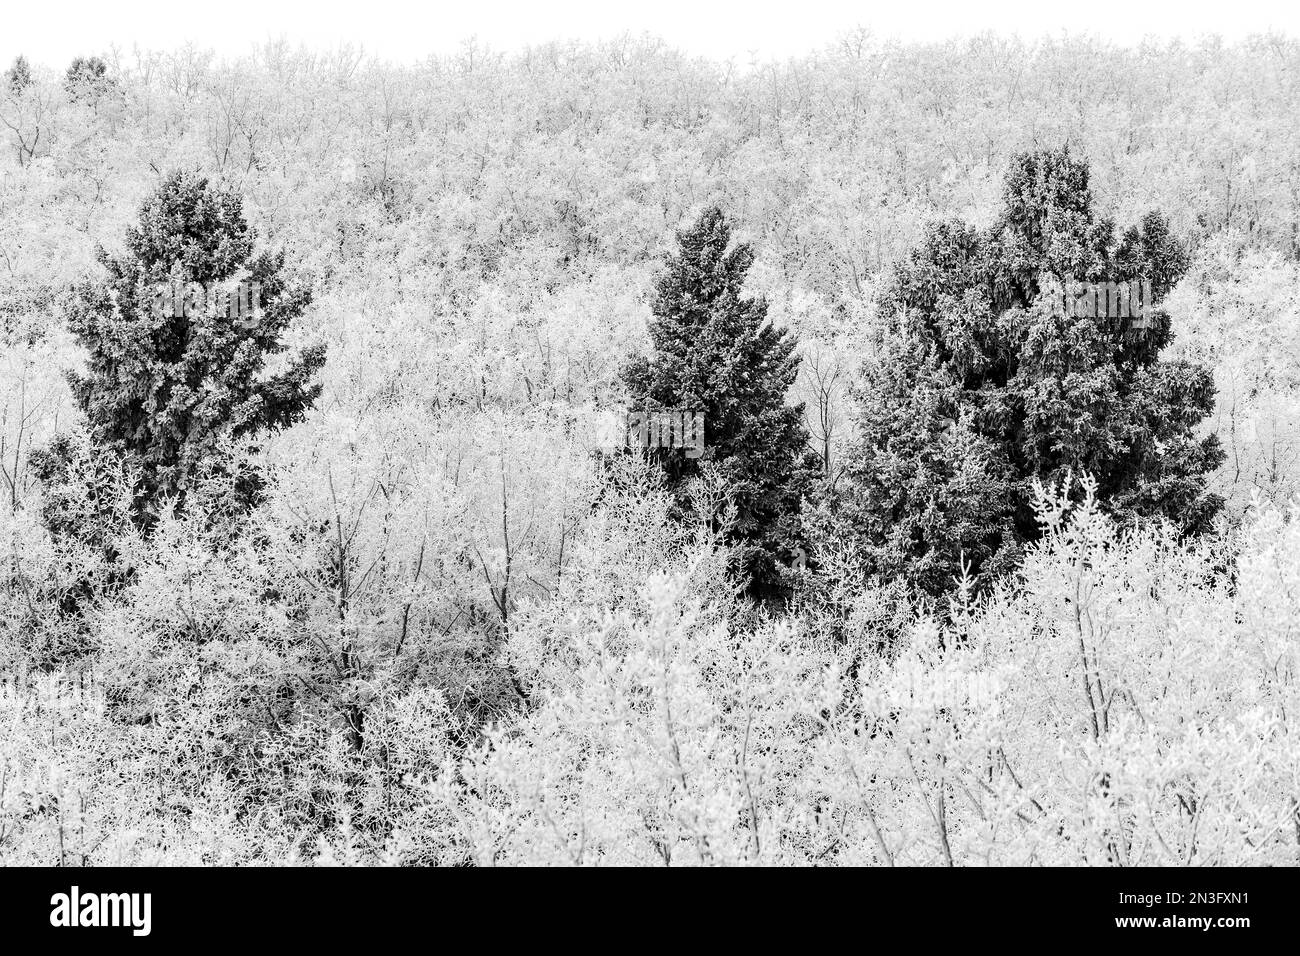 Frostige immergrüne Bäume an einem Hügel mit frostigen Laubbbäumen in Calgary, Alberta, Kanada Stockfoto